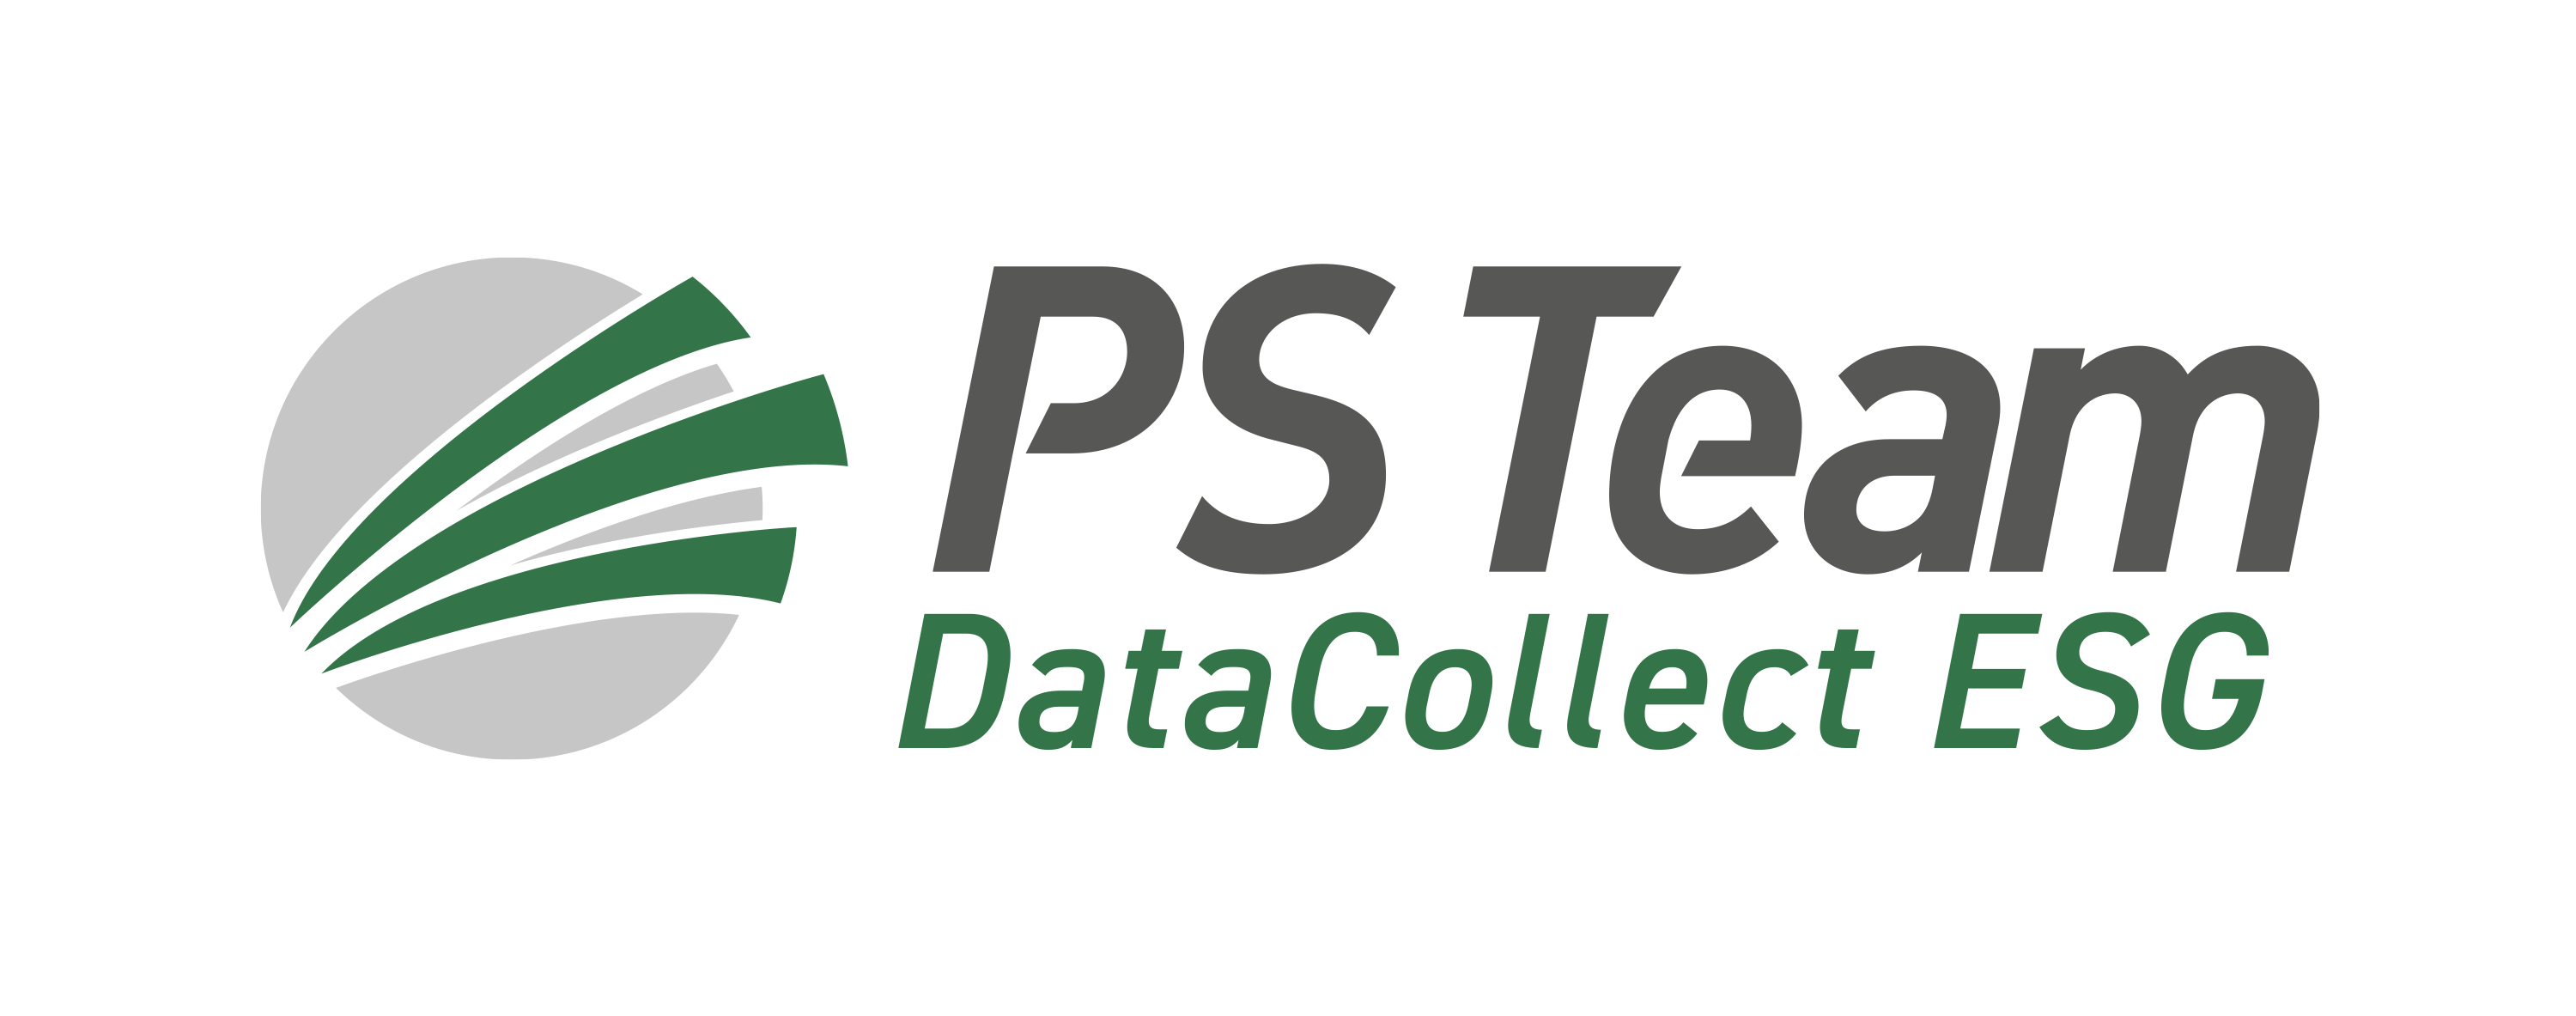 PS Team GmbH Logo